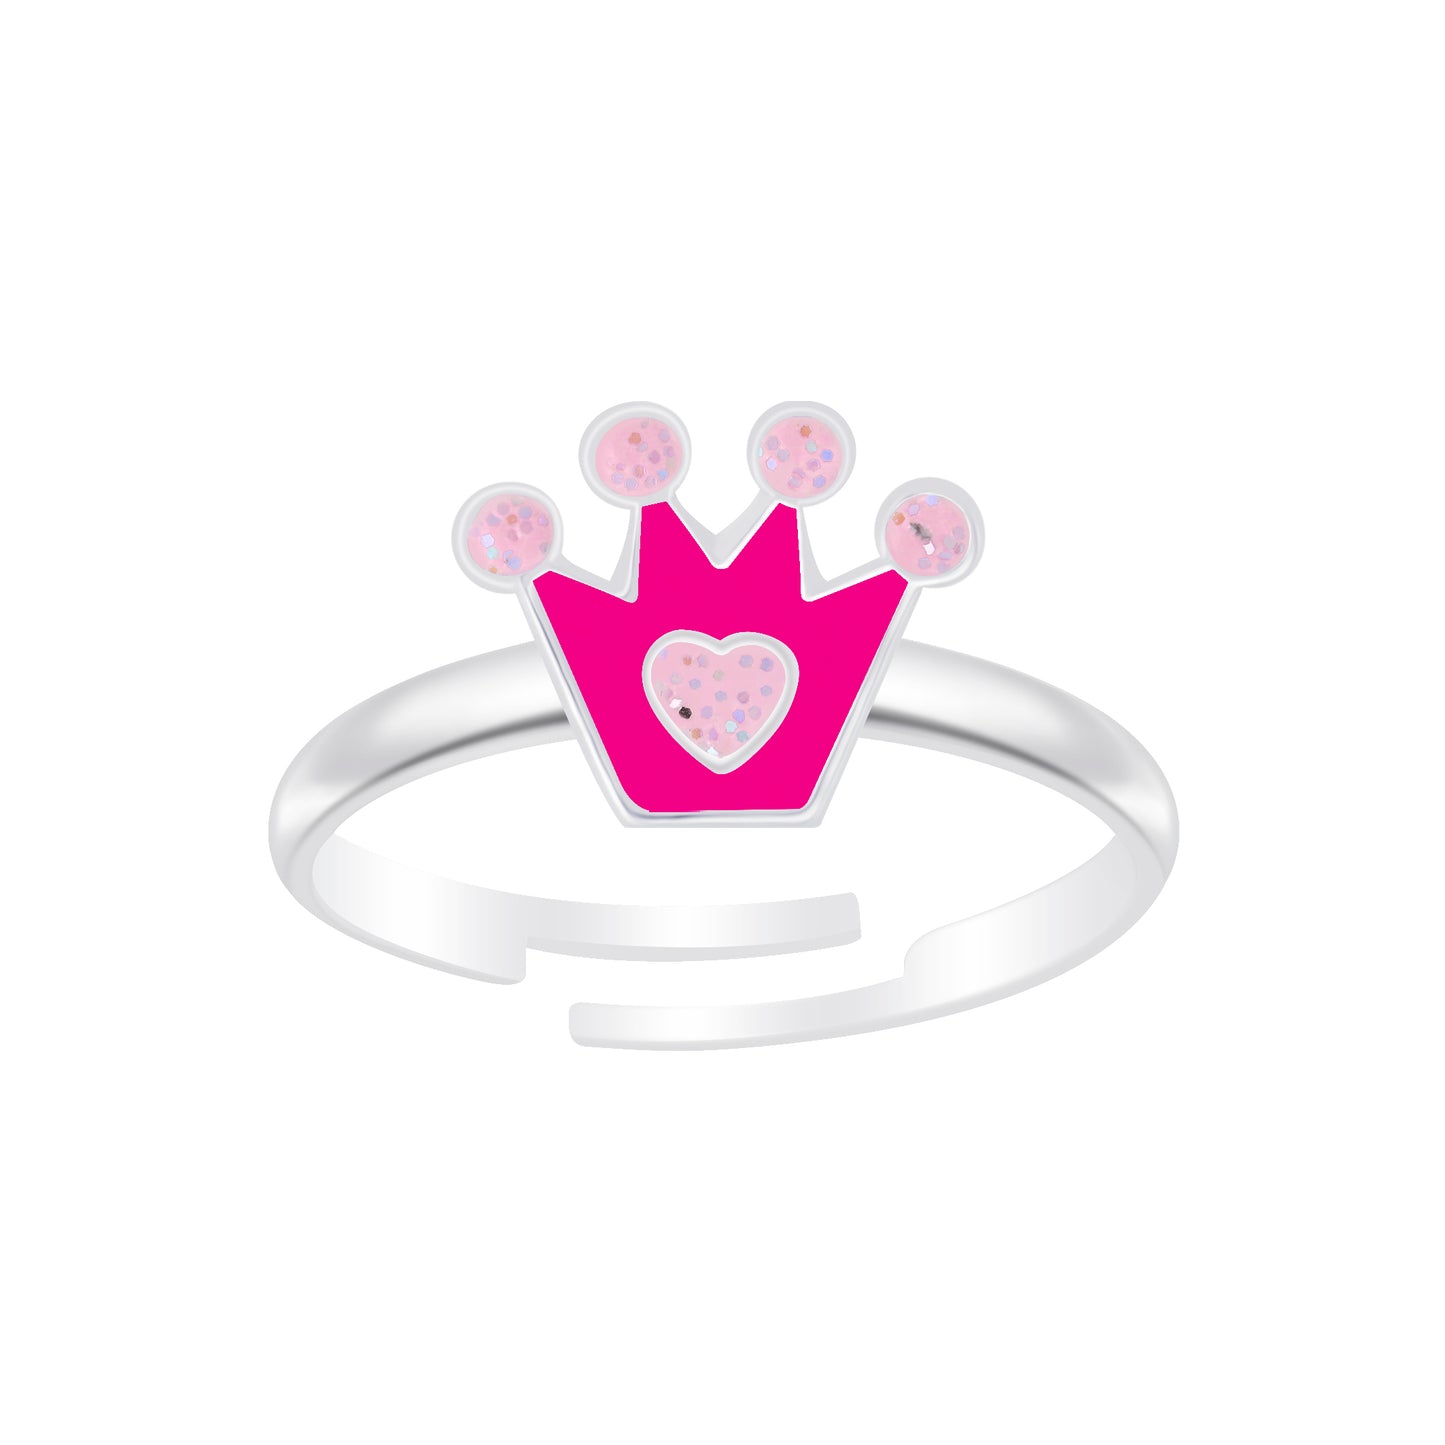 Children's Sterling Silver Adjustable Princess Crown Ring